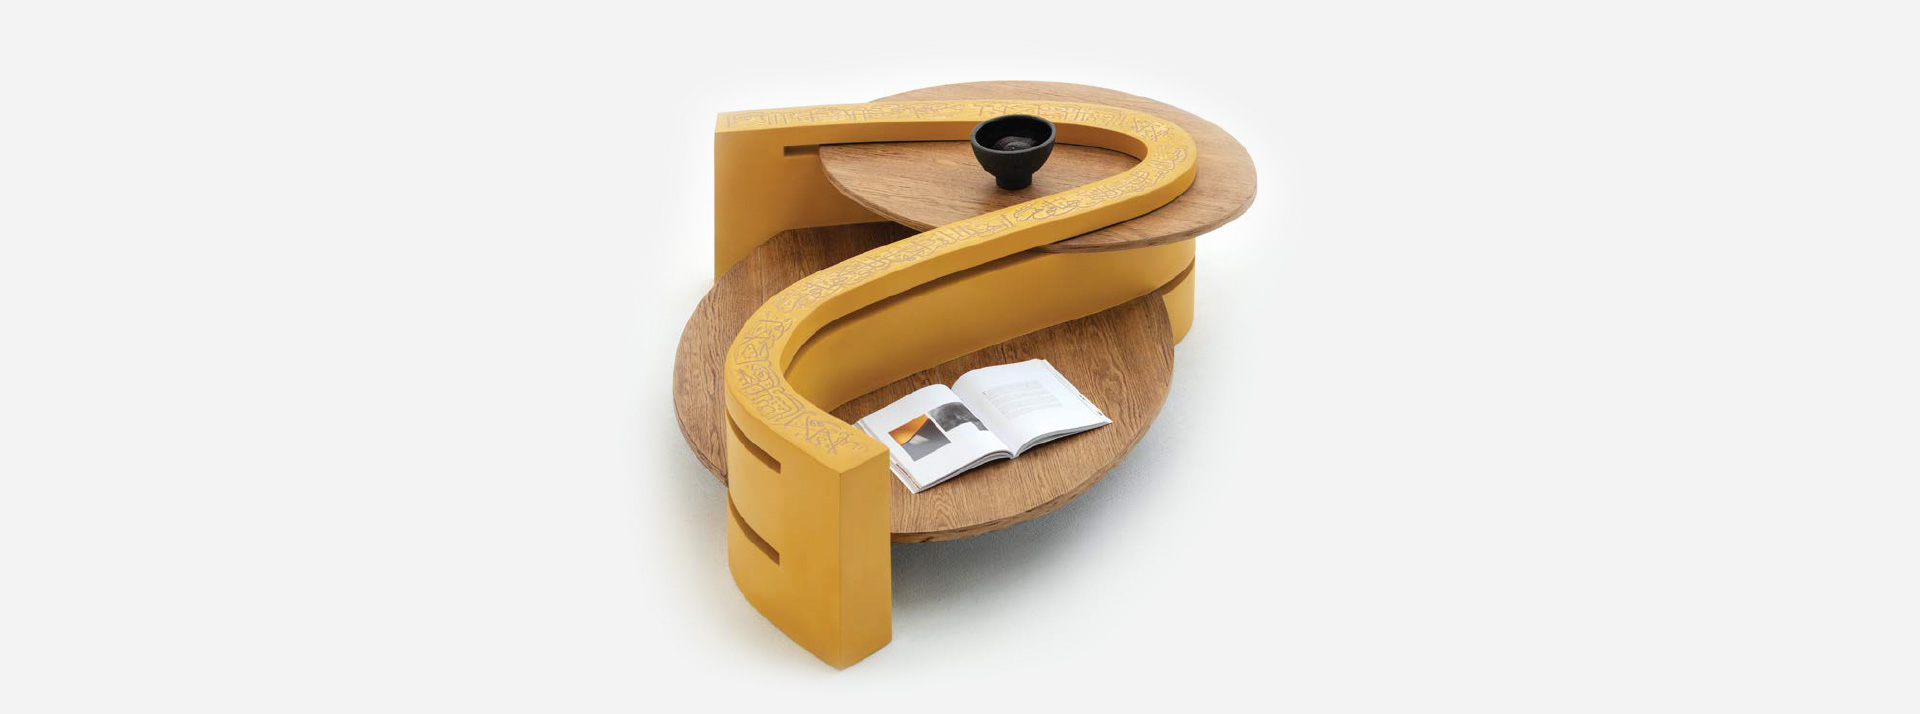 HAA Concrete Coffee Table wood